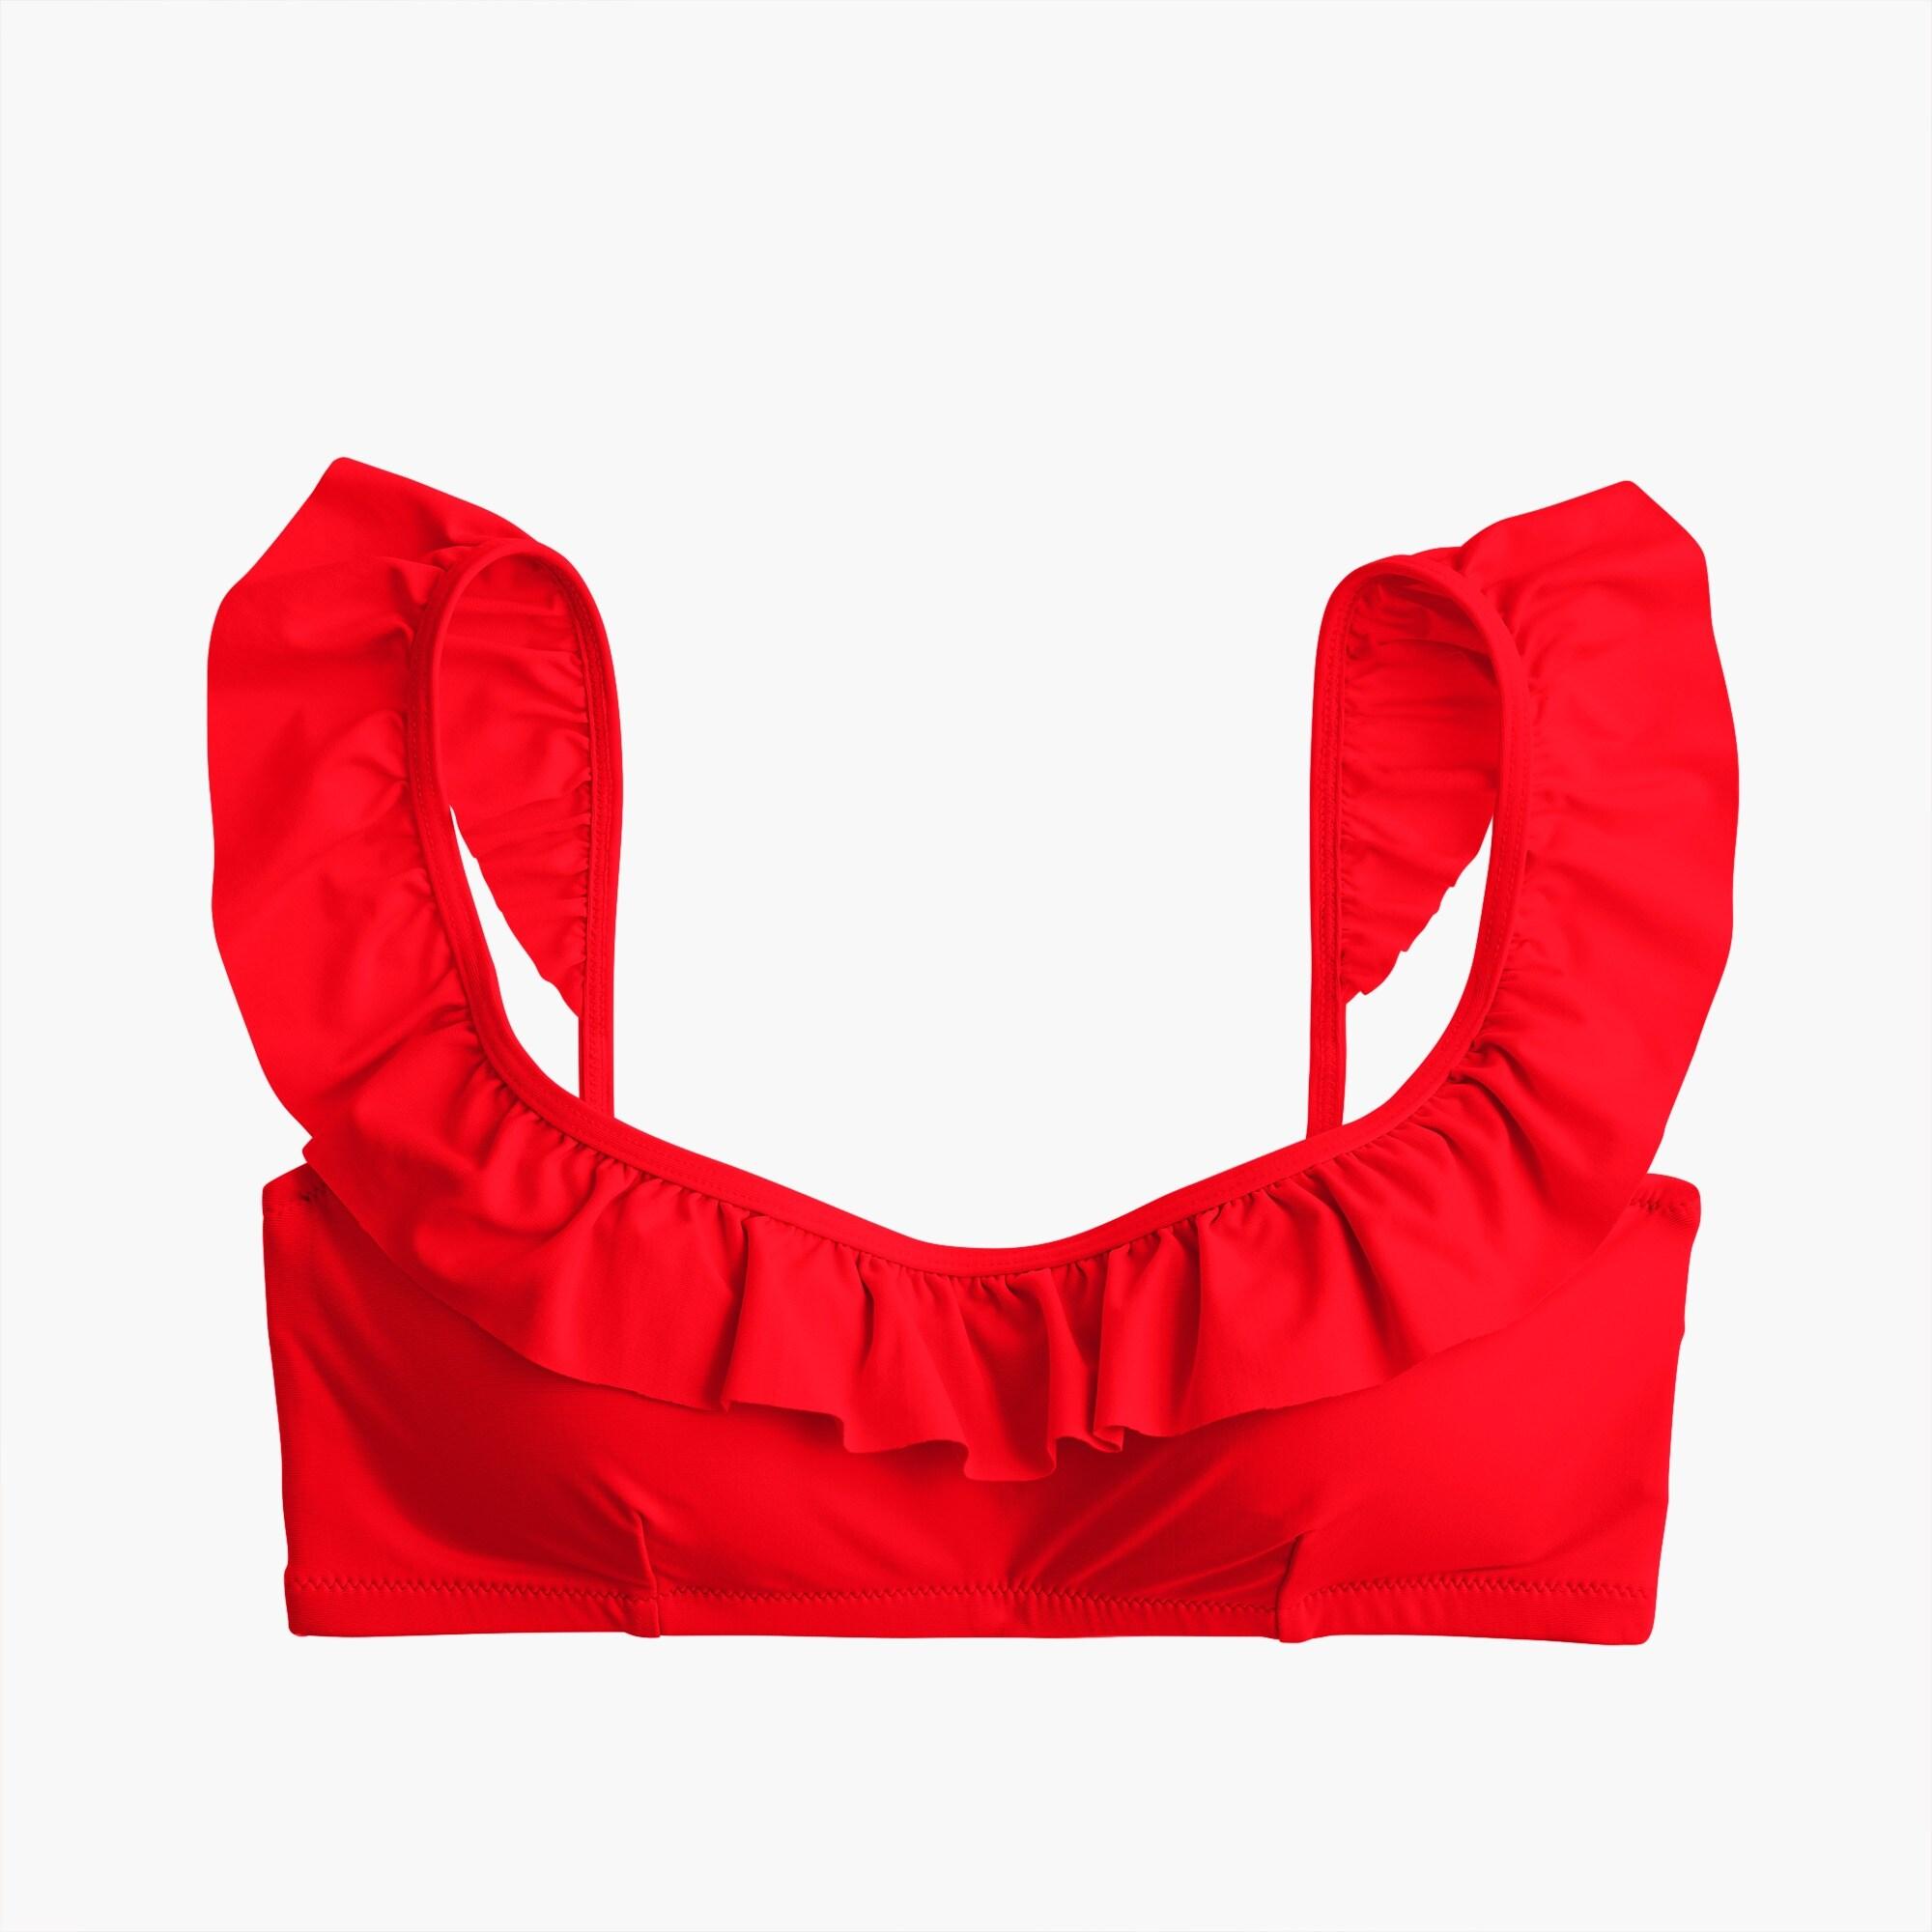 J.Crew Synthetic Ruffle Bikini Top in Bright Cerise (Red) - Save 59% - Lyst